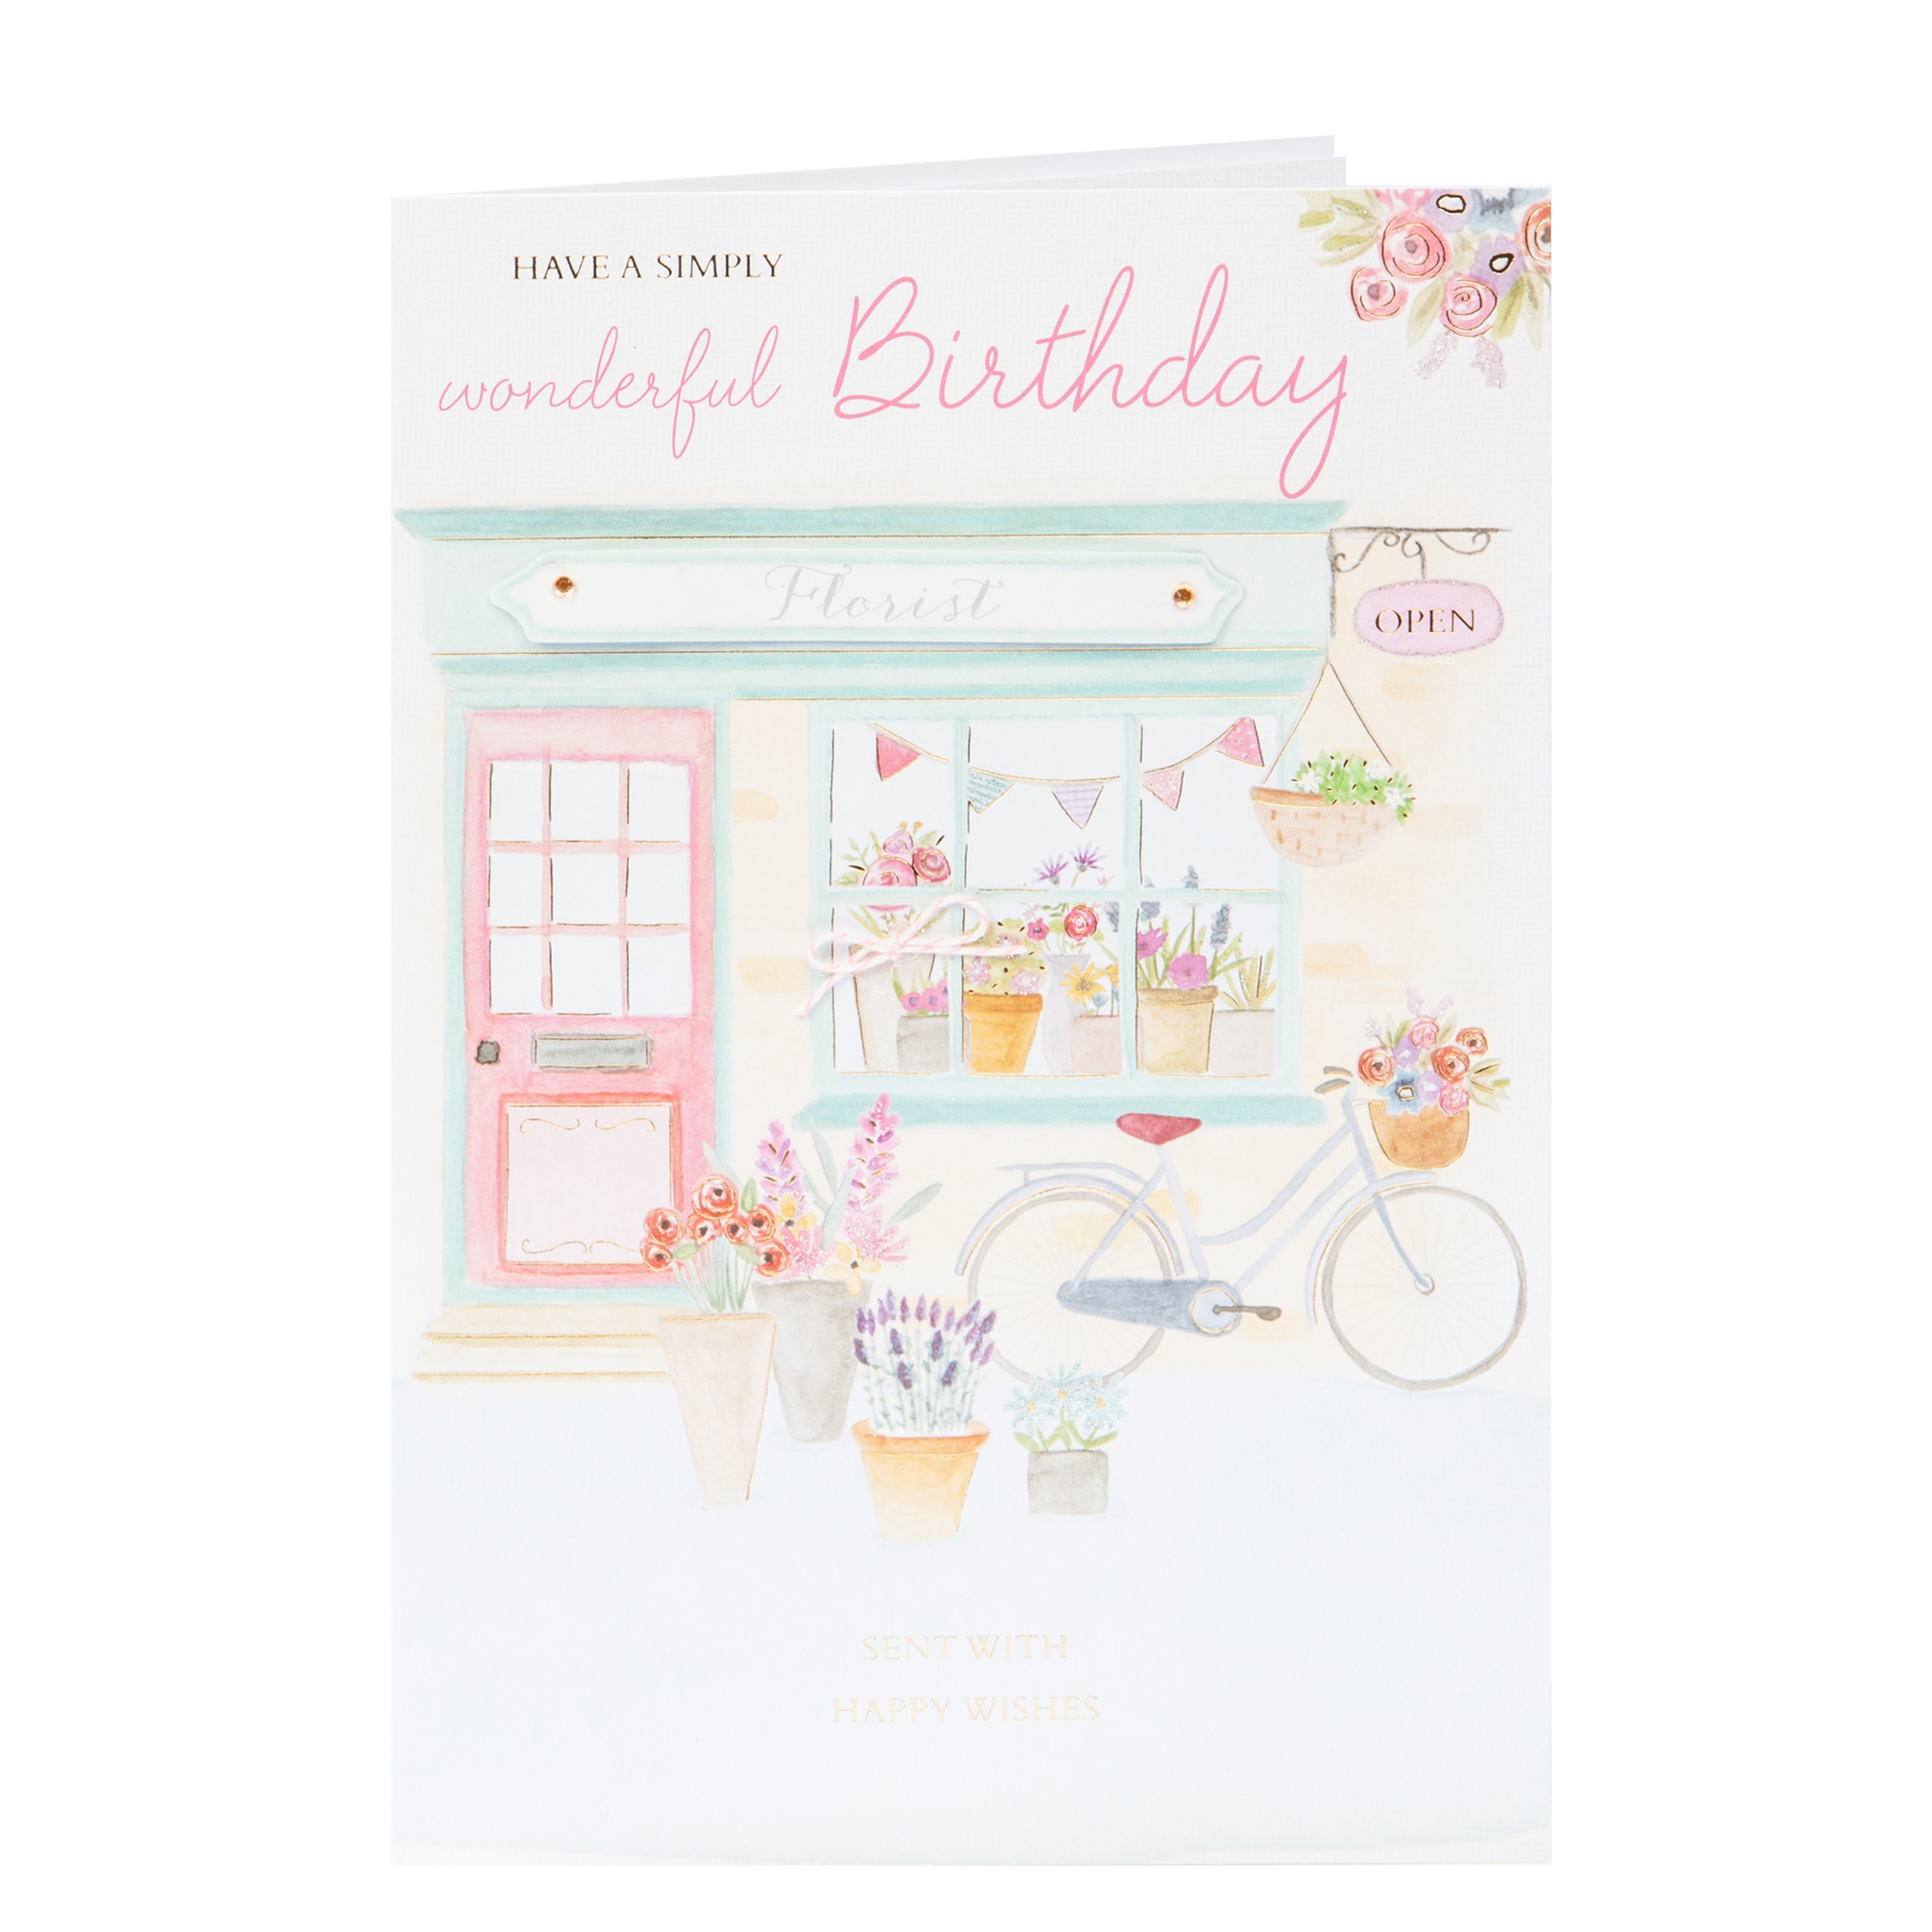 Birthday card - Simply Wonderful Birthday